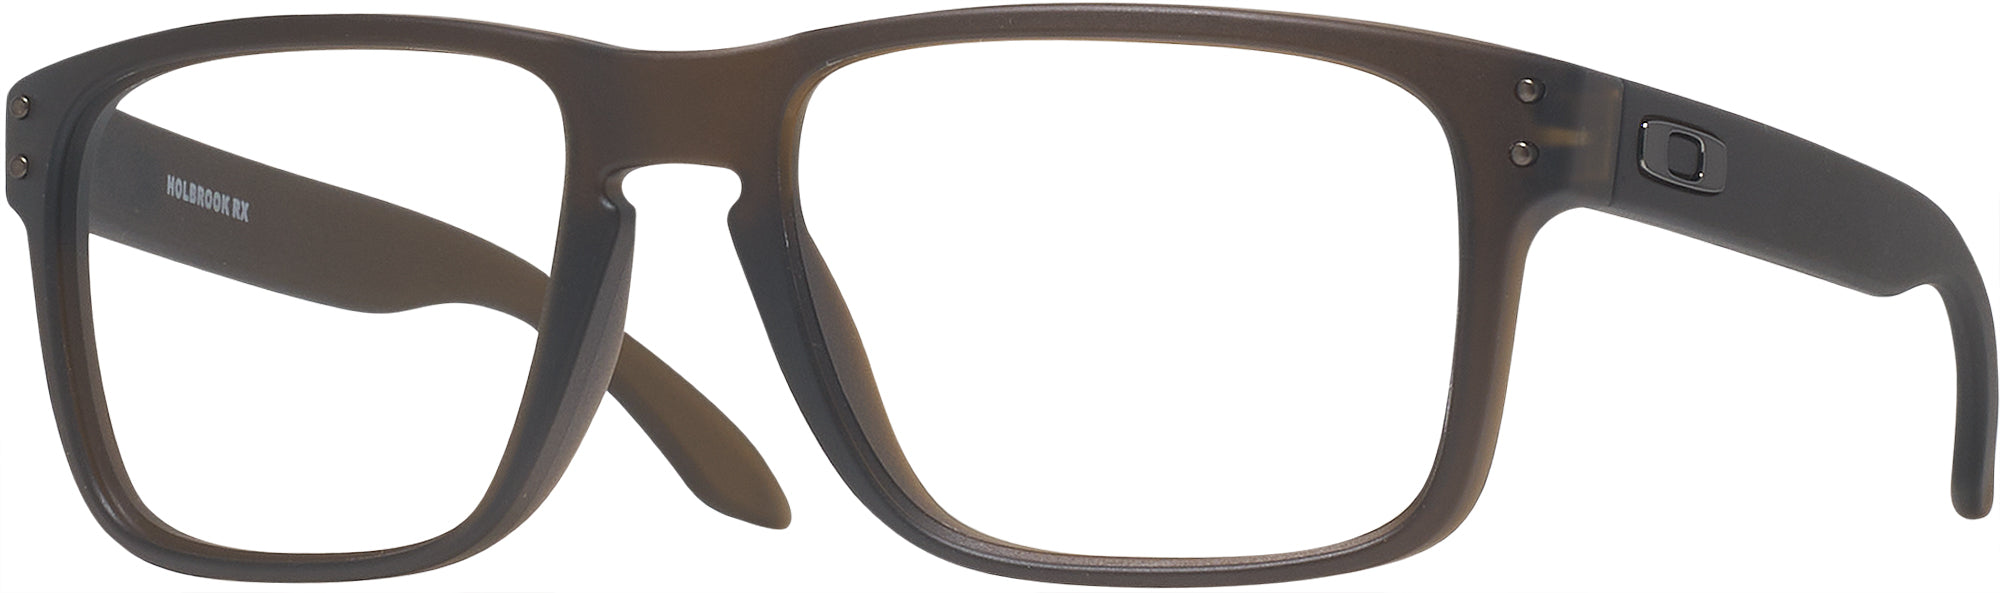 Oakley Holbrook RX Single Full Frame – ReadingGlasses.com